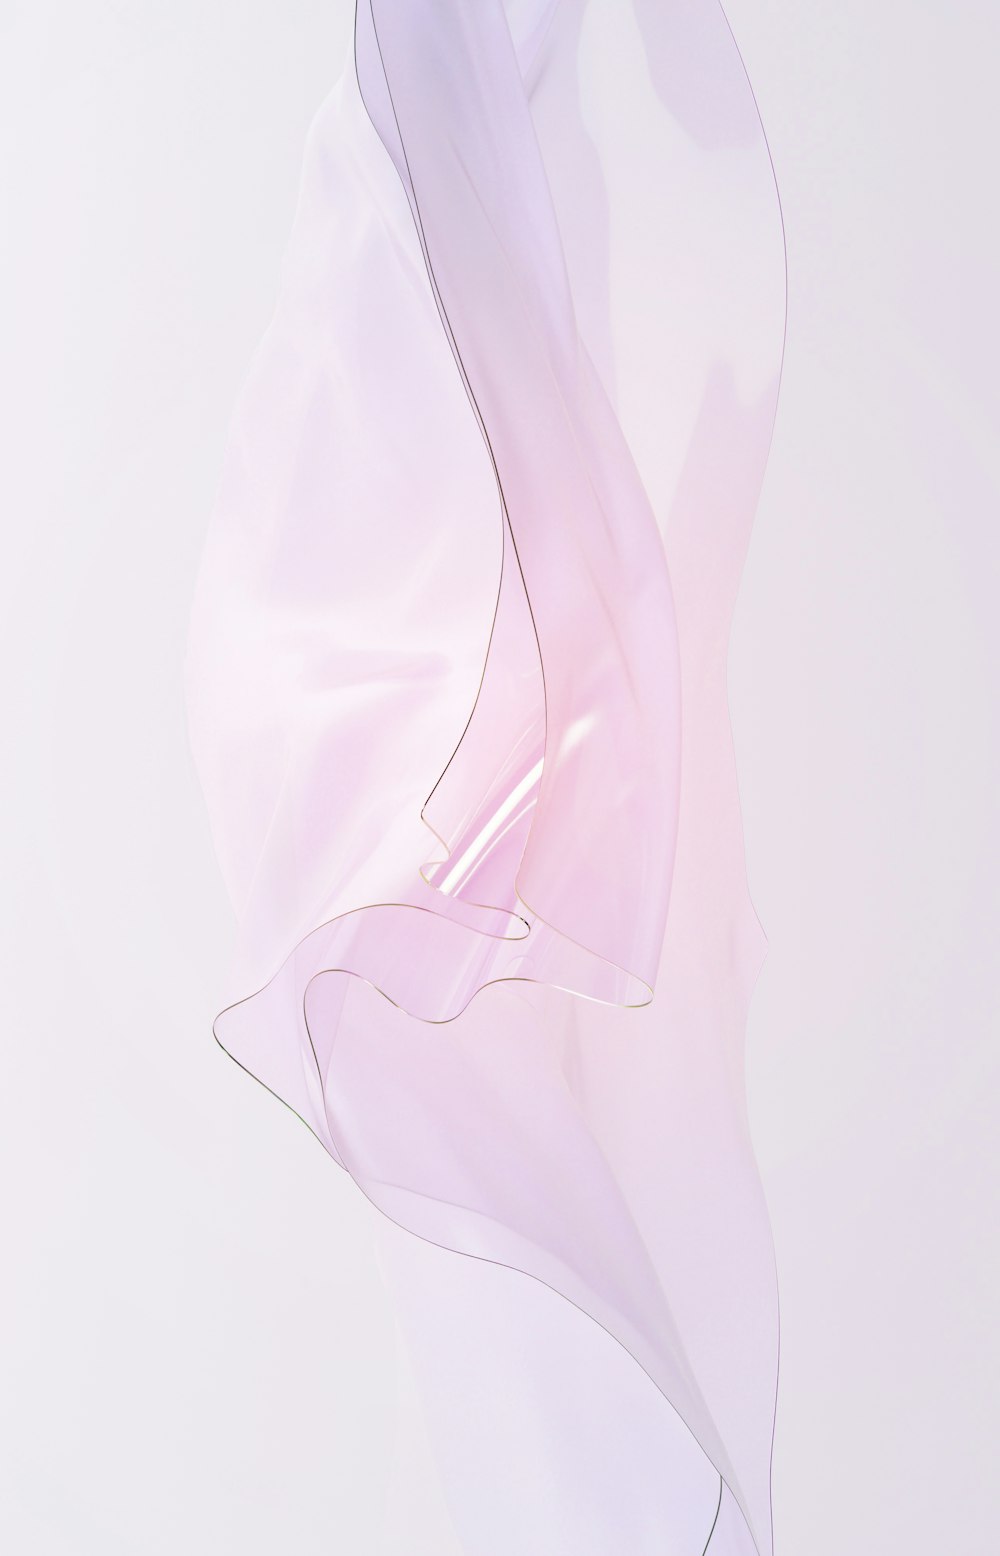 une photographie abstraite d’un tissu blanc